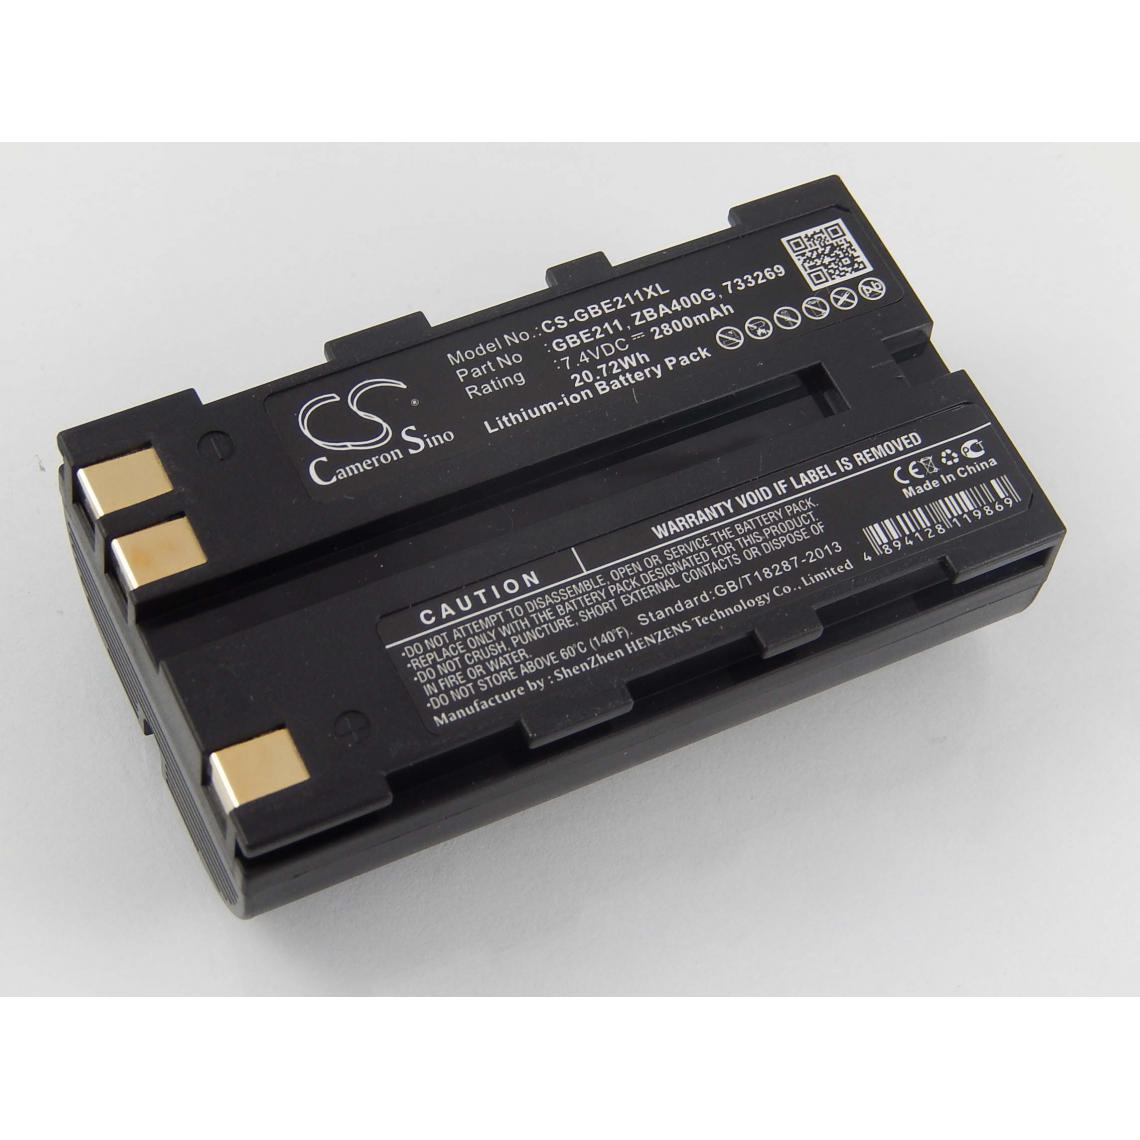 Vhbw - vhbw Batterie compatible avec Leica Flexline TS02, TS06, TS09 dispositif de mesure laser, outil de mesure (2800mAh, 7,4V, Li-ion) - Piles rechargeables